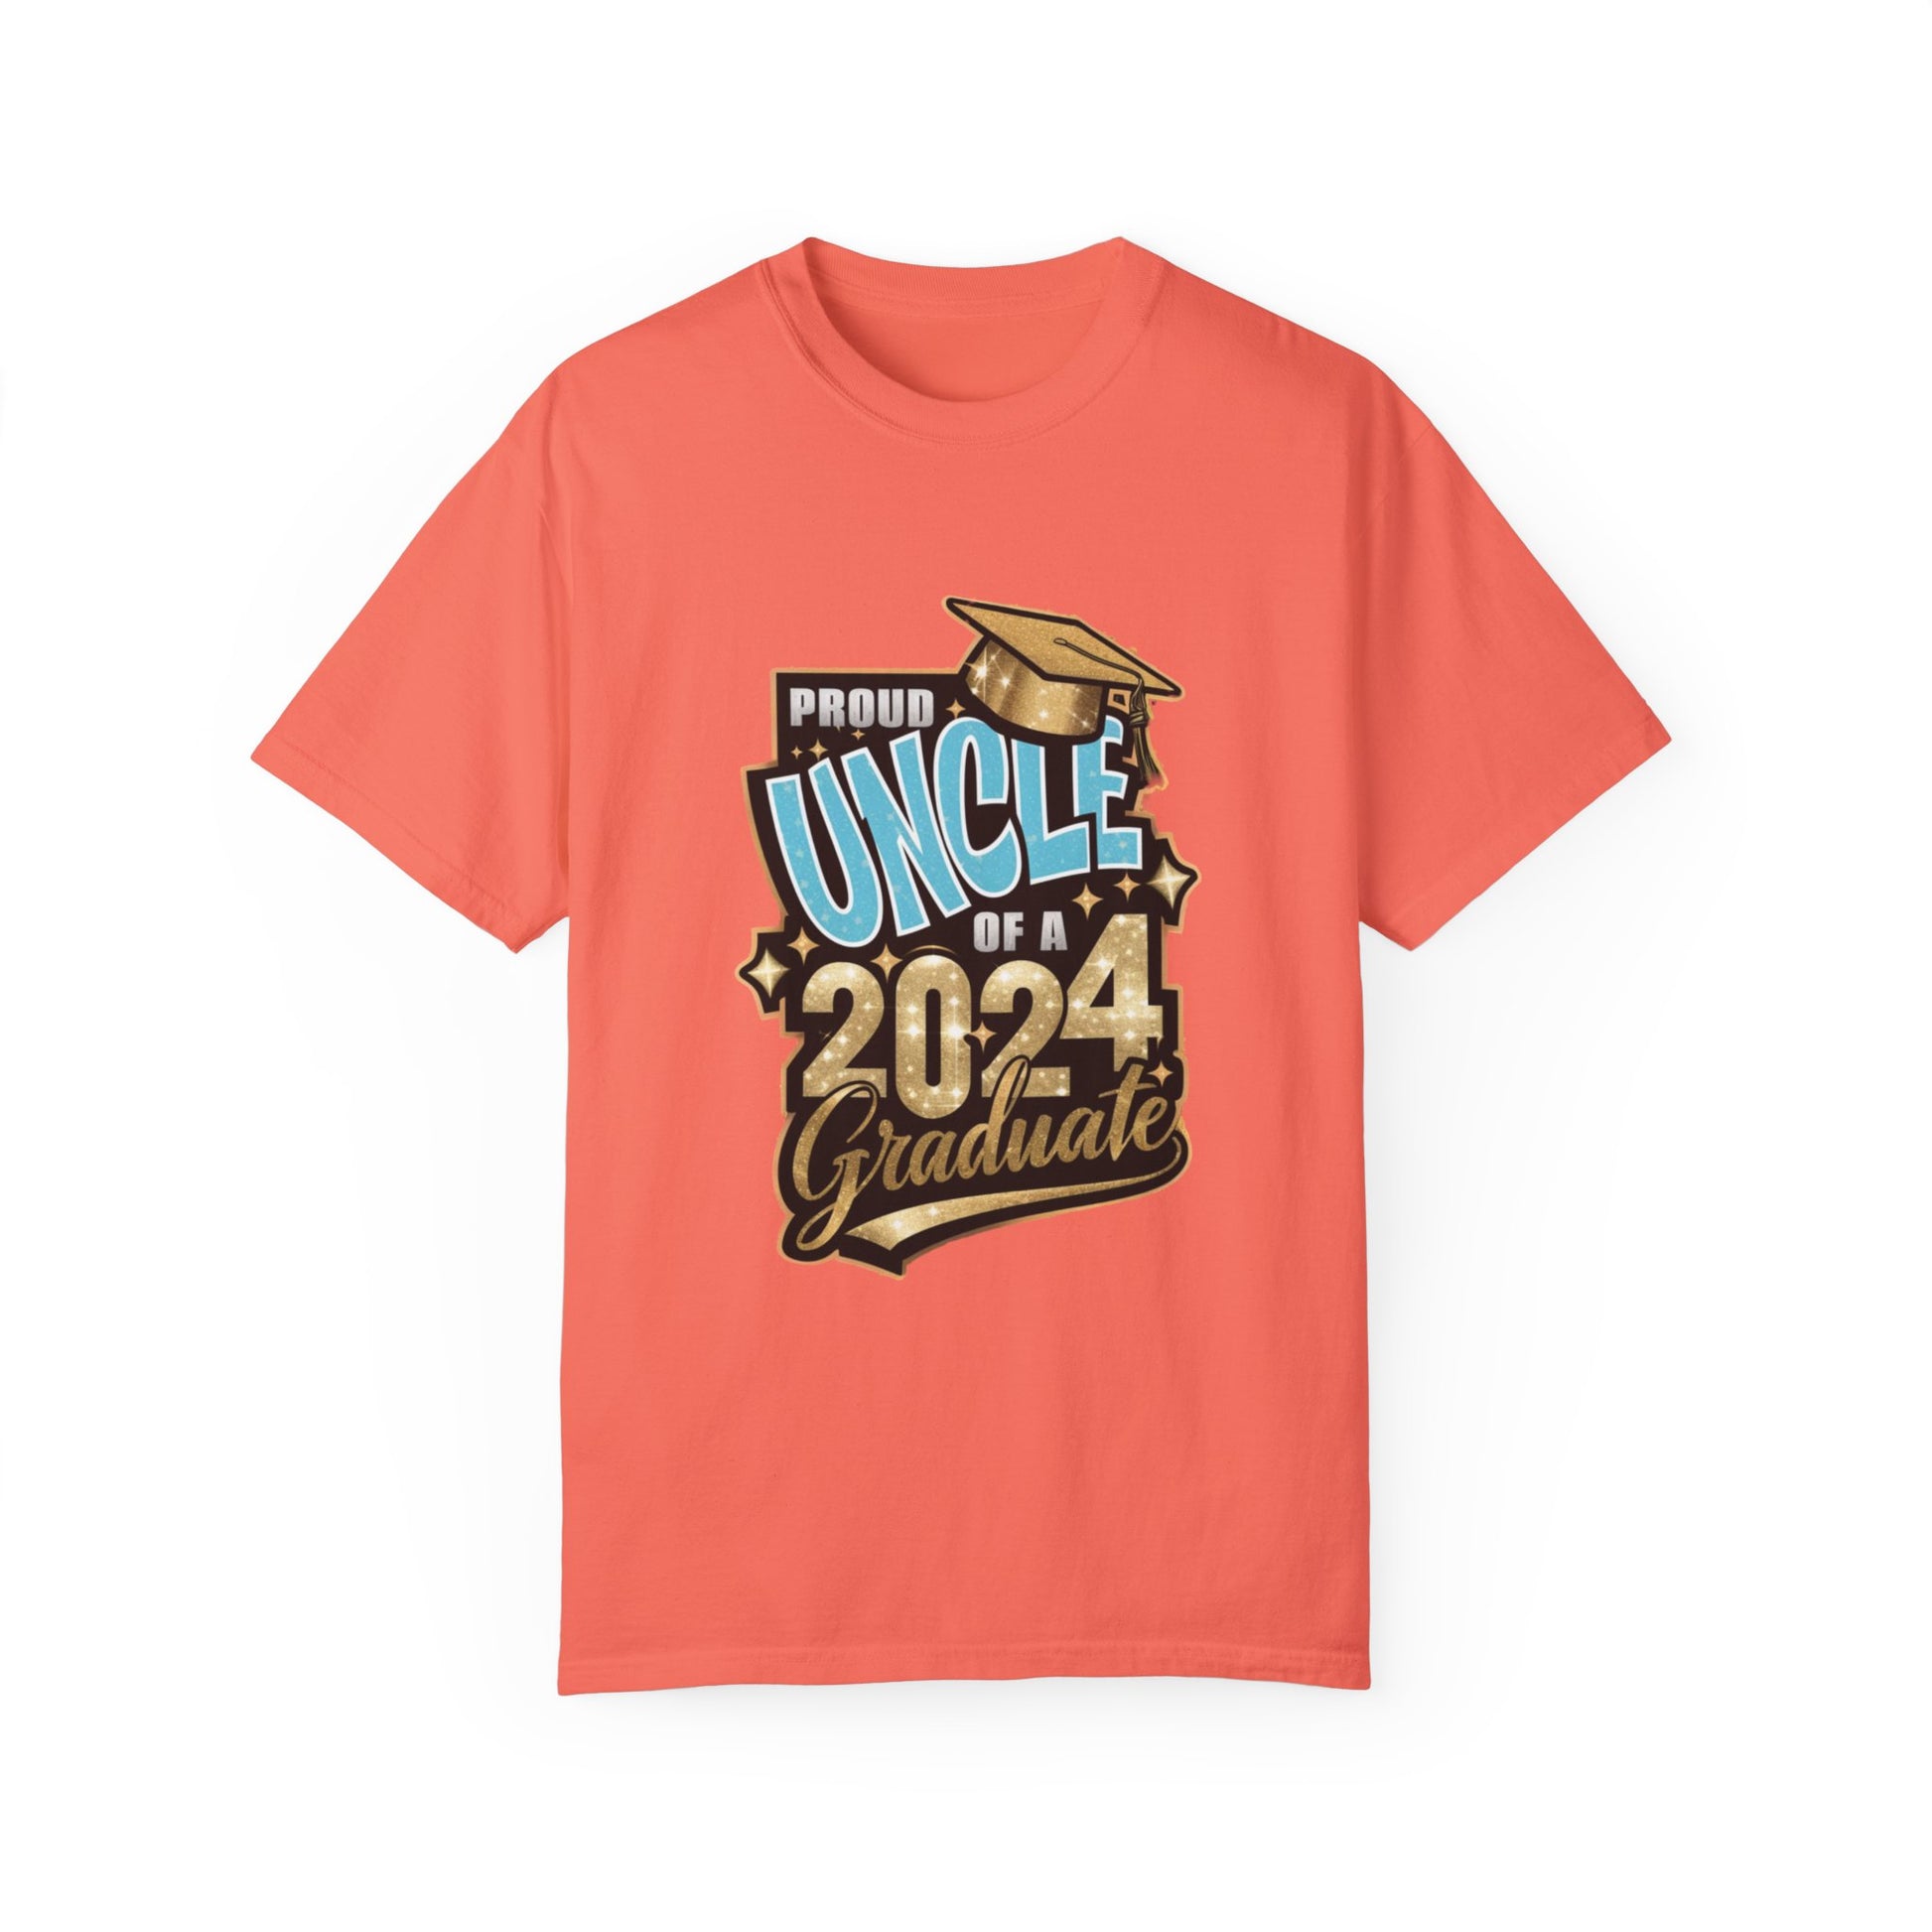 Proud Uncle of a 2024 Graduate Unisex Garment-dyed T-shirt Cotton Funny Humorous Graphic Soft Premium Unisex Men Women Bright Salmon T-shirt Birthday Gift-6